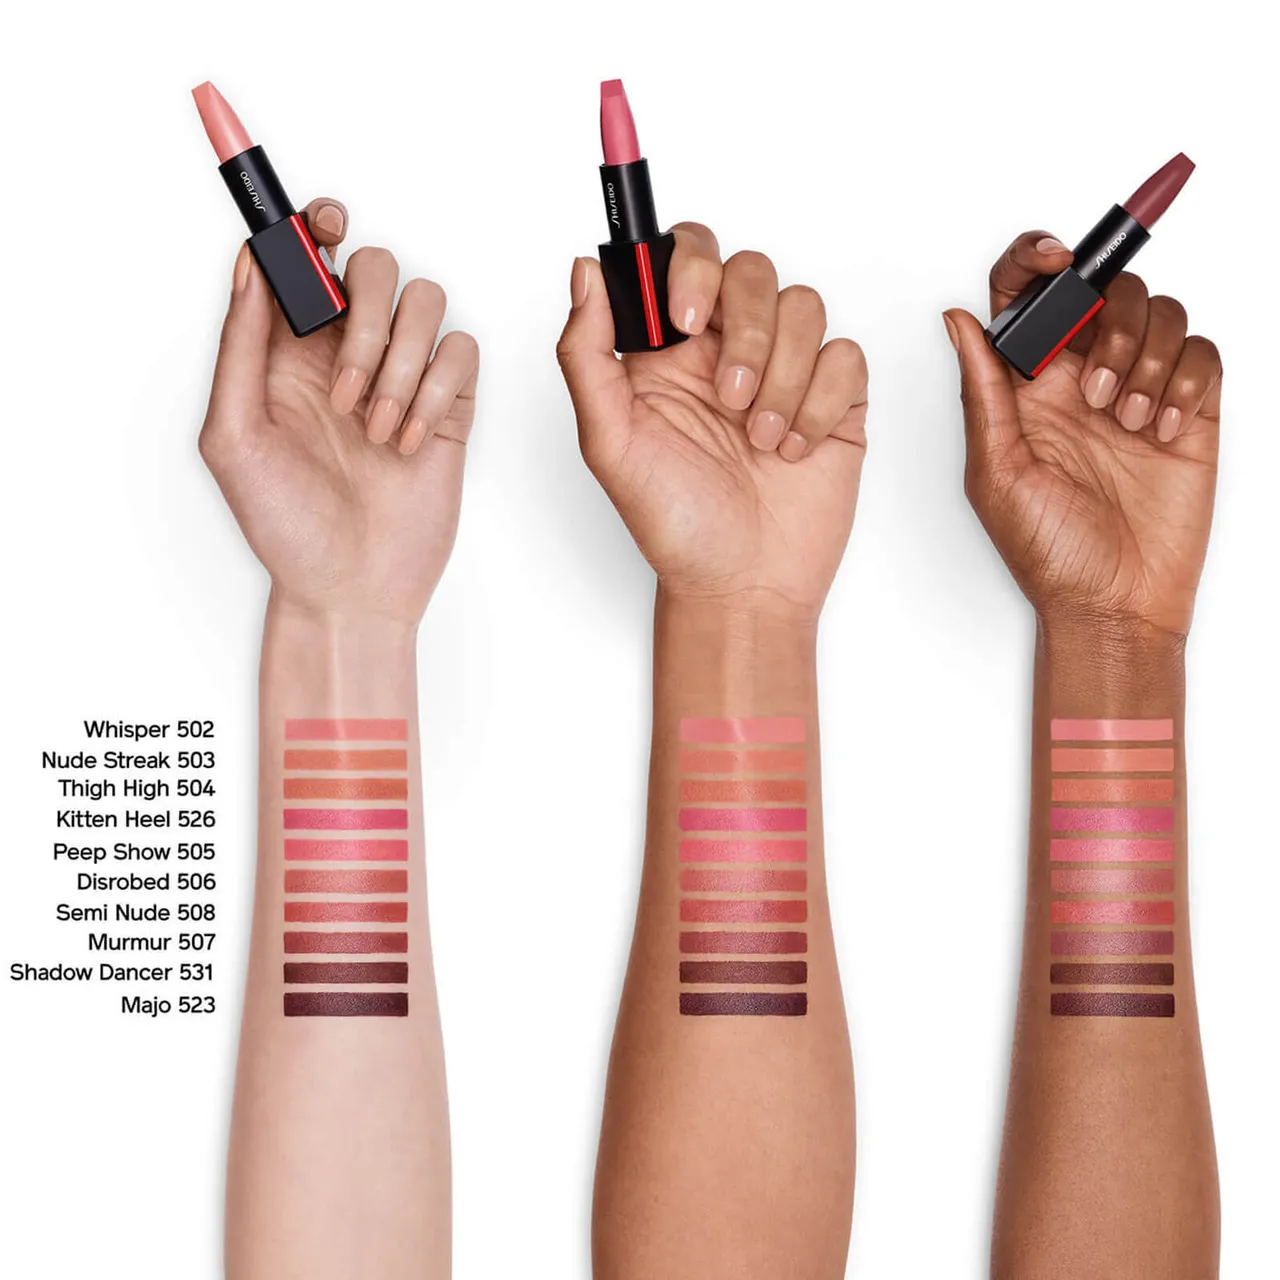 Shiseido ModernMatte Powder Lipstick (Various Shades) - Hyper Red 514